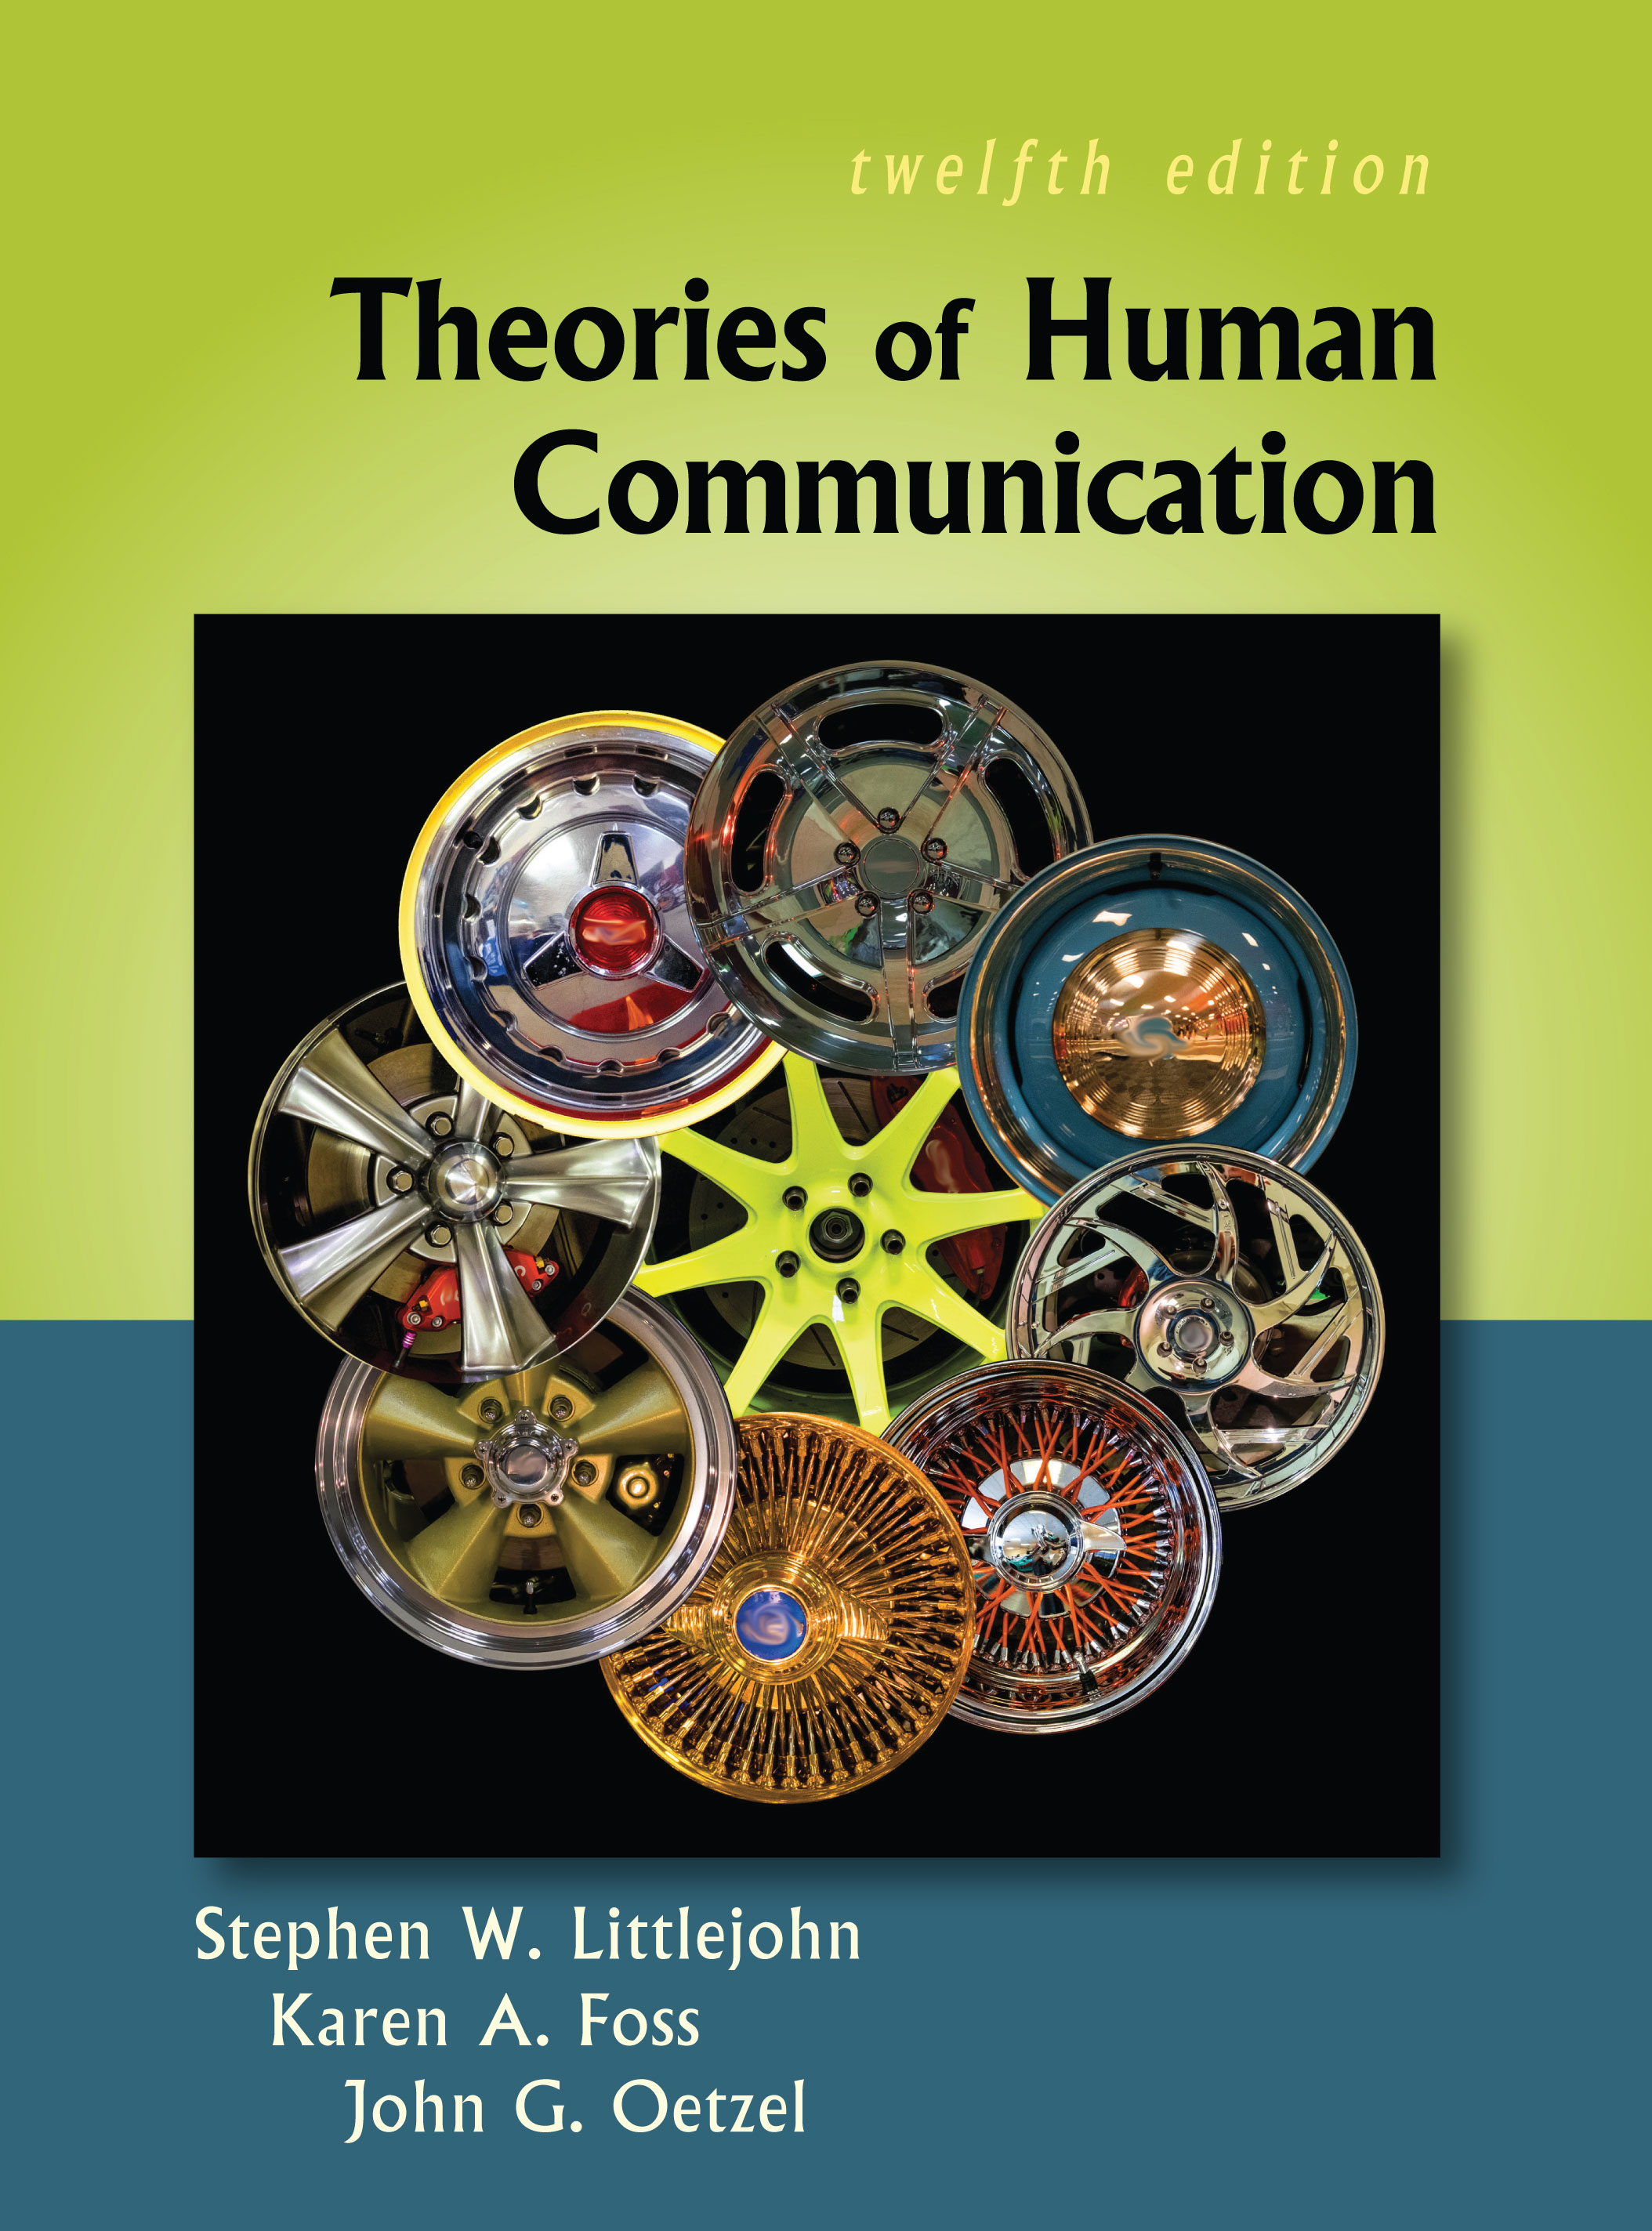 Theories of Human Communication:  by Stephen W. Littlejohn, Karen A. Foss, John G. Oetzel